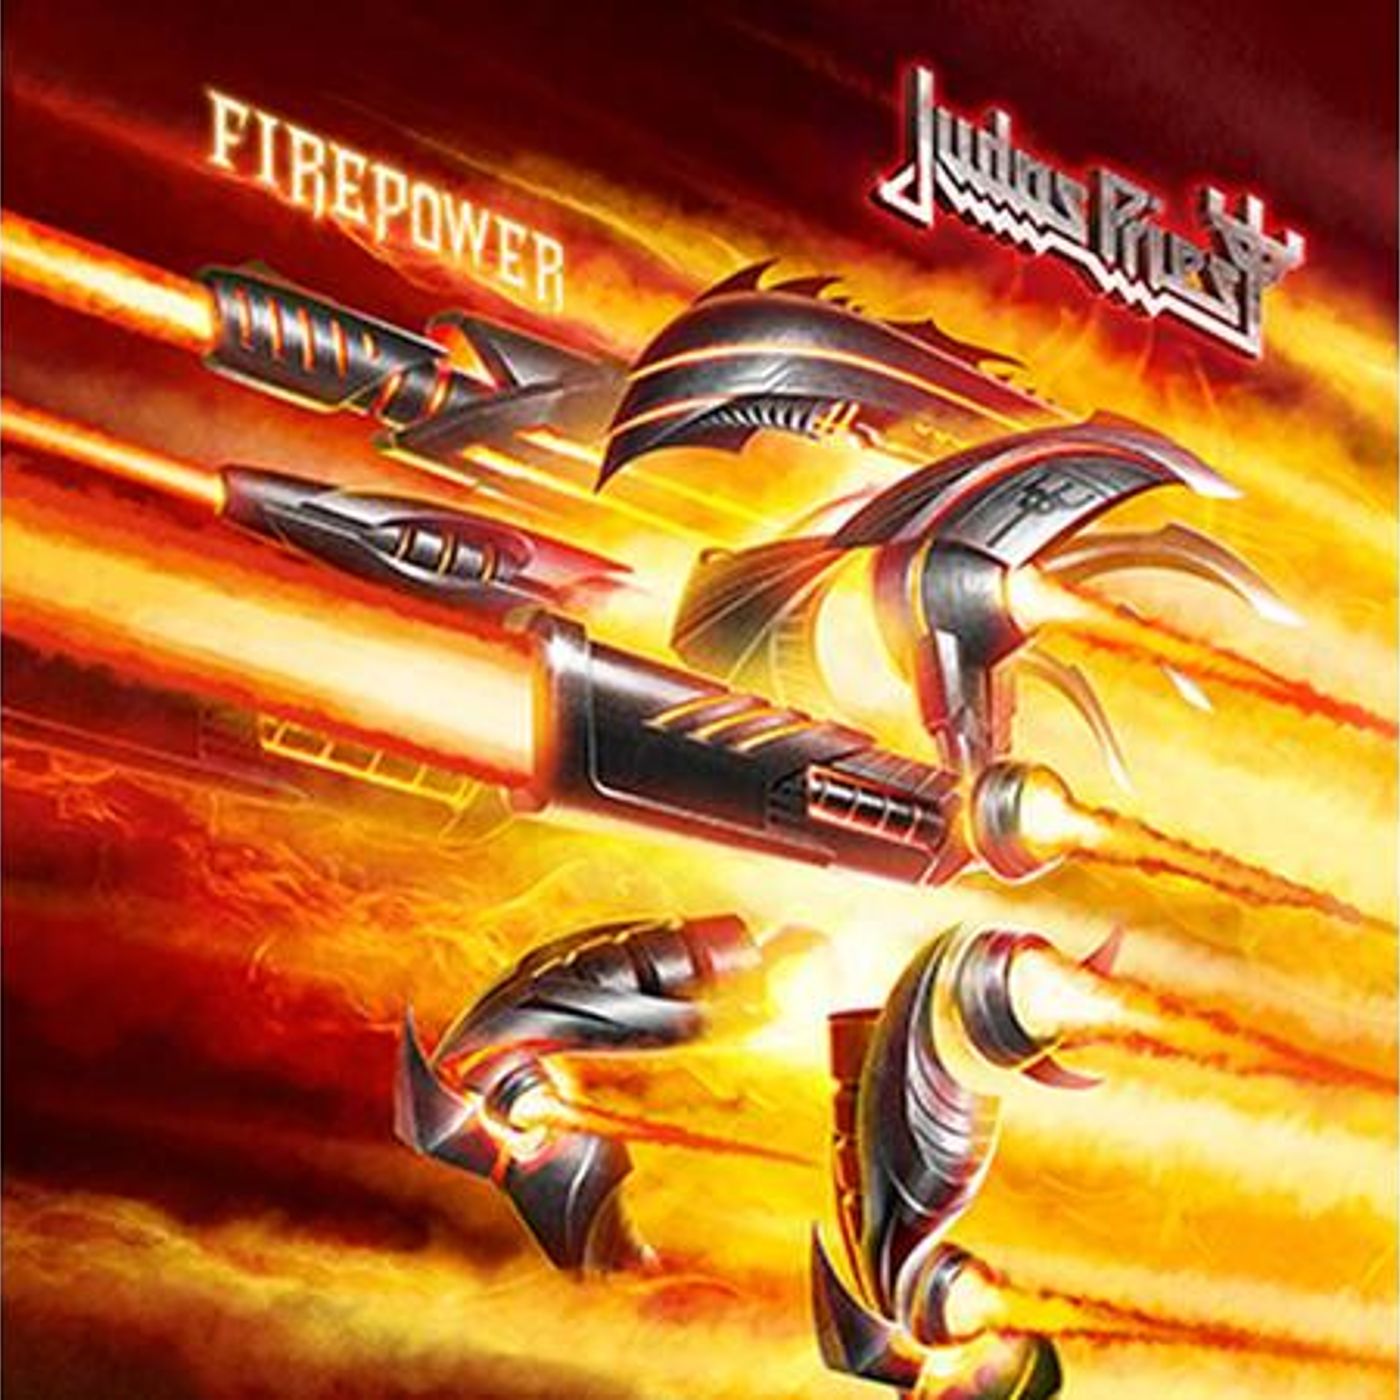 Metal Hammer of Doom: Judas Priest - Firepower